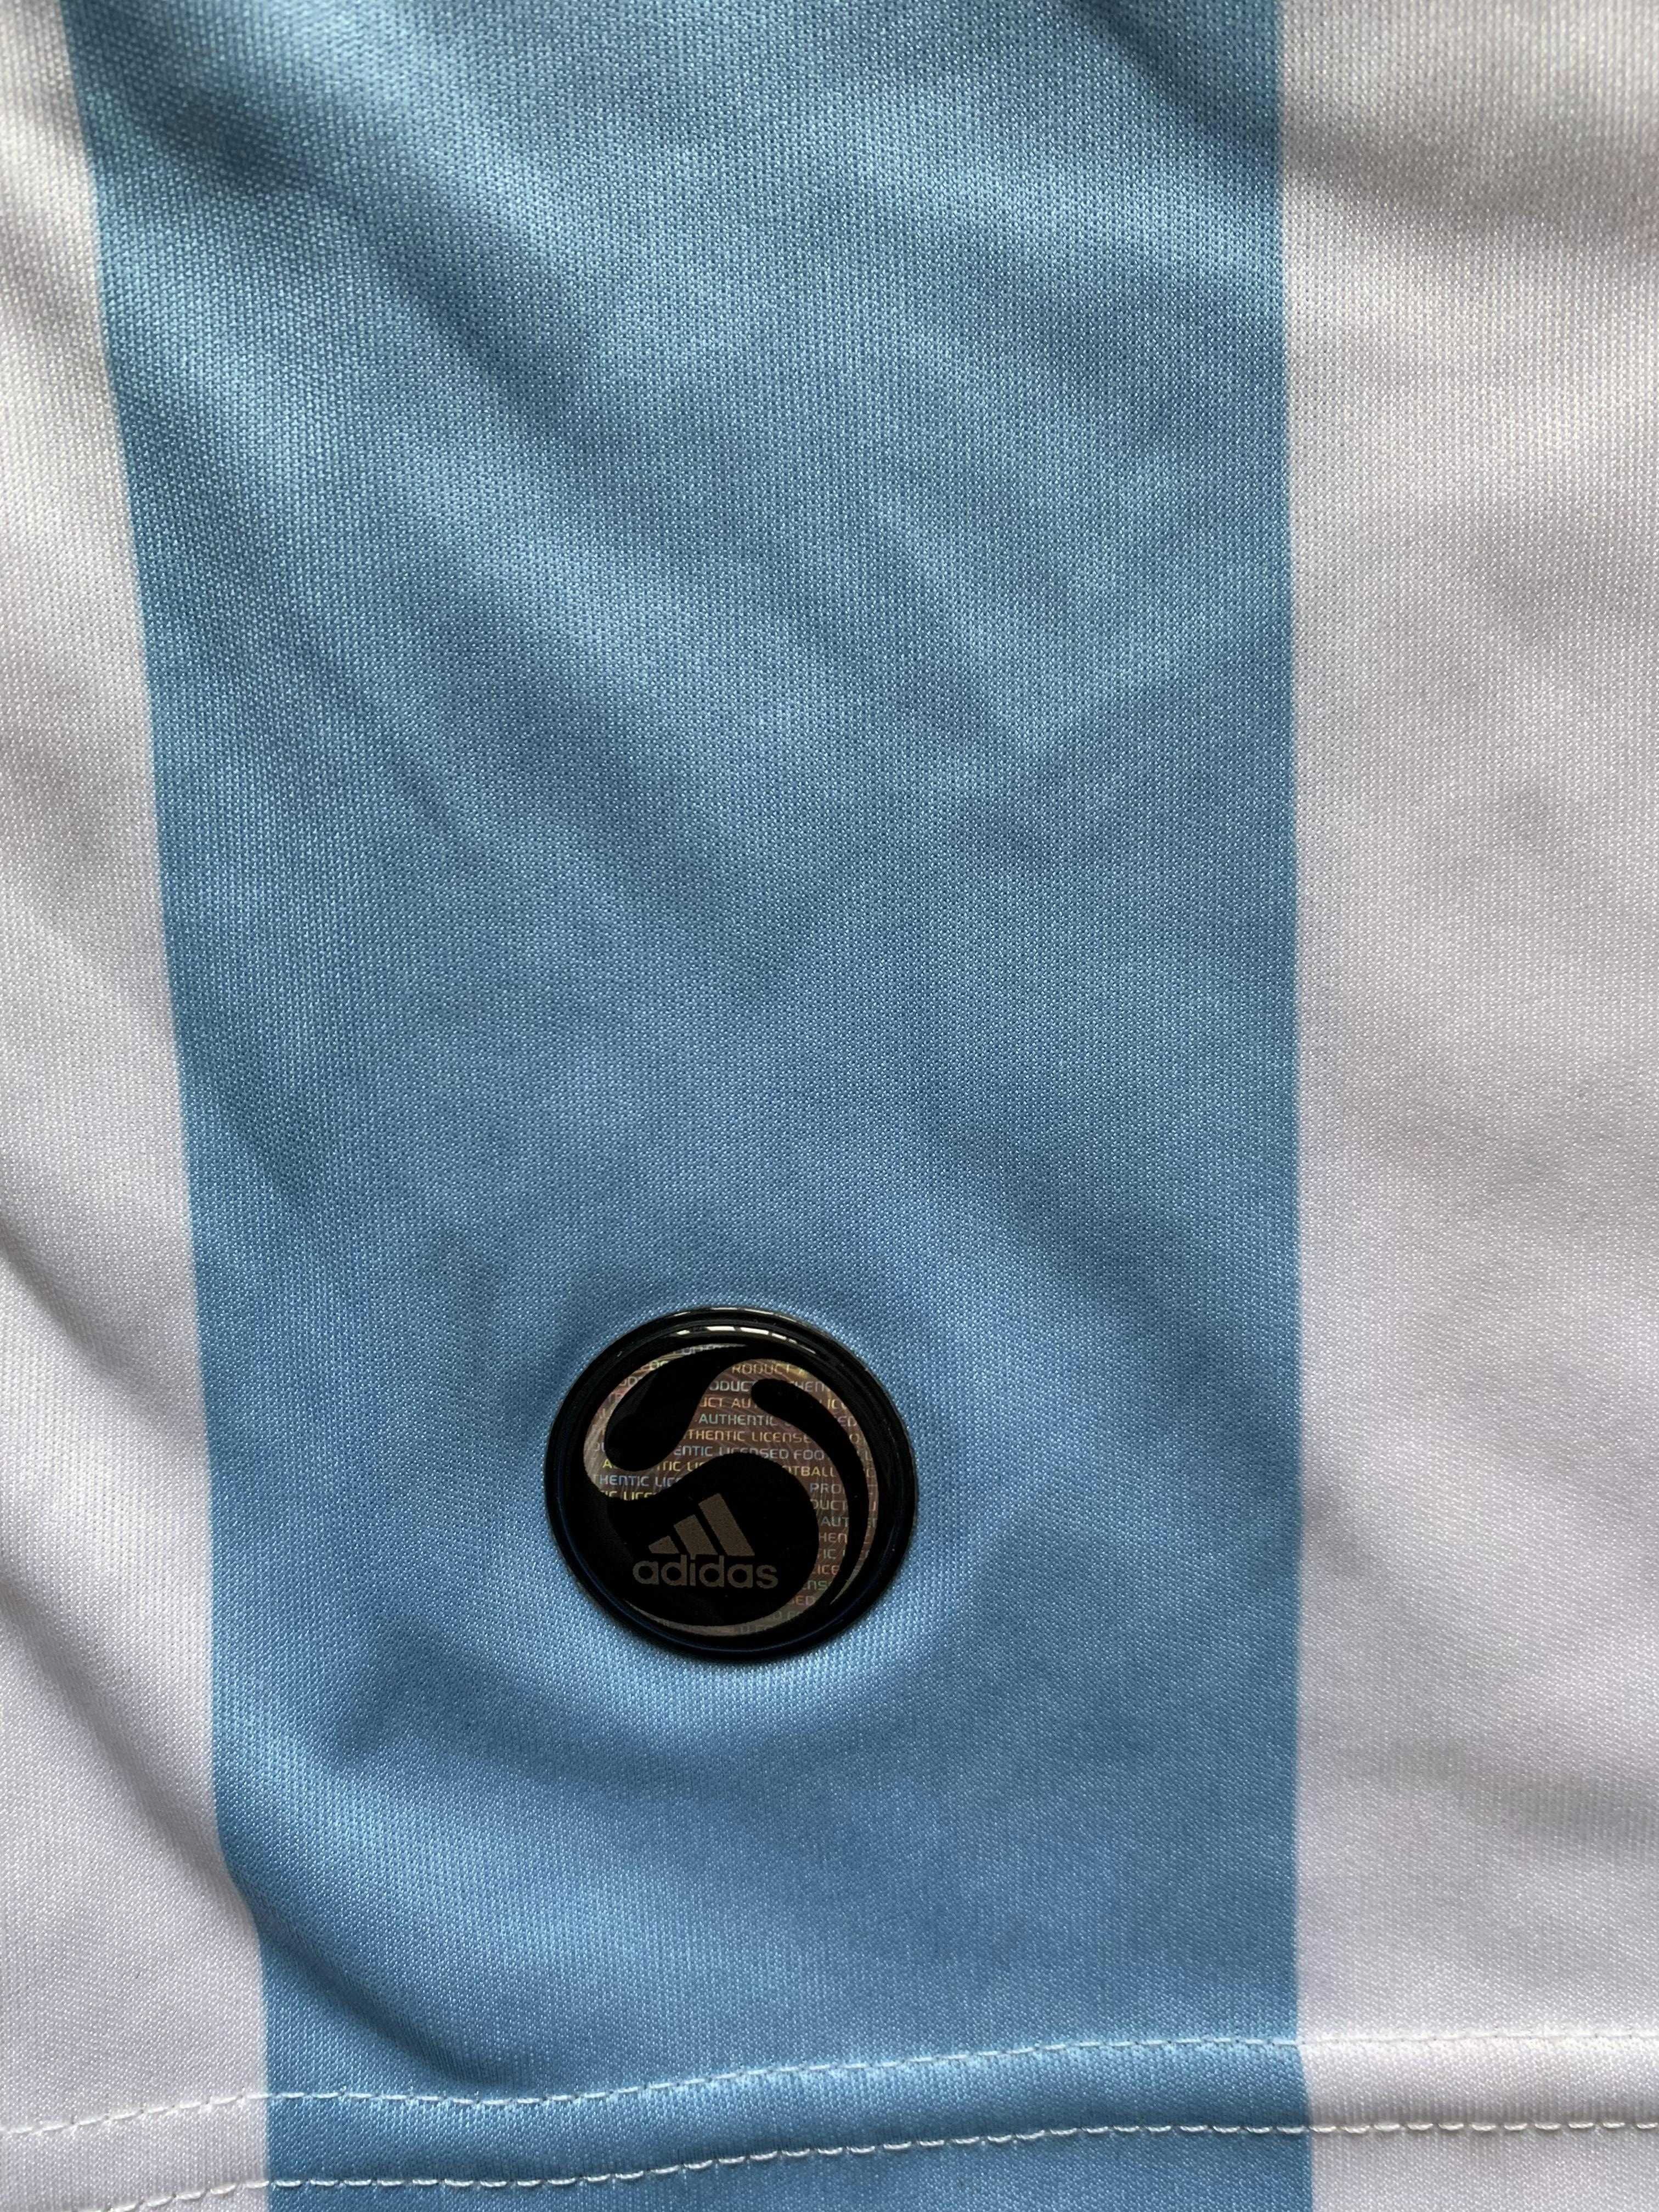 Tricou Argentina World Cup 2008 Fotbal BlokeCore Adidas Messi Maradona